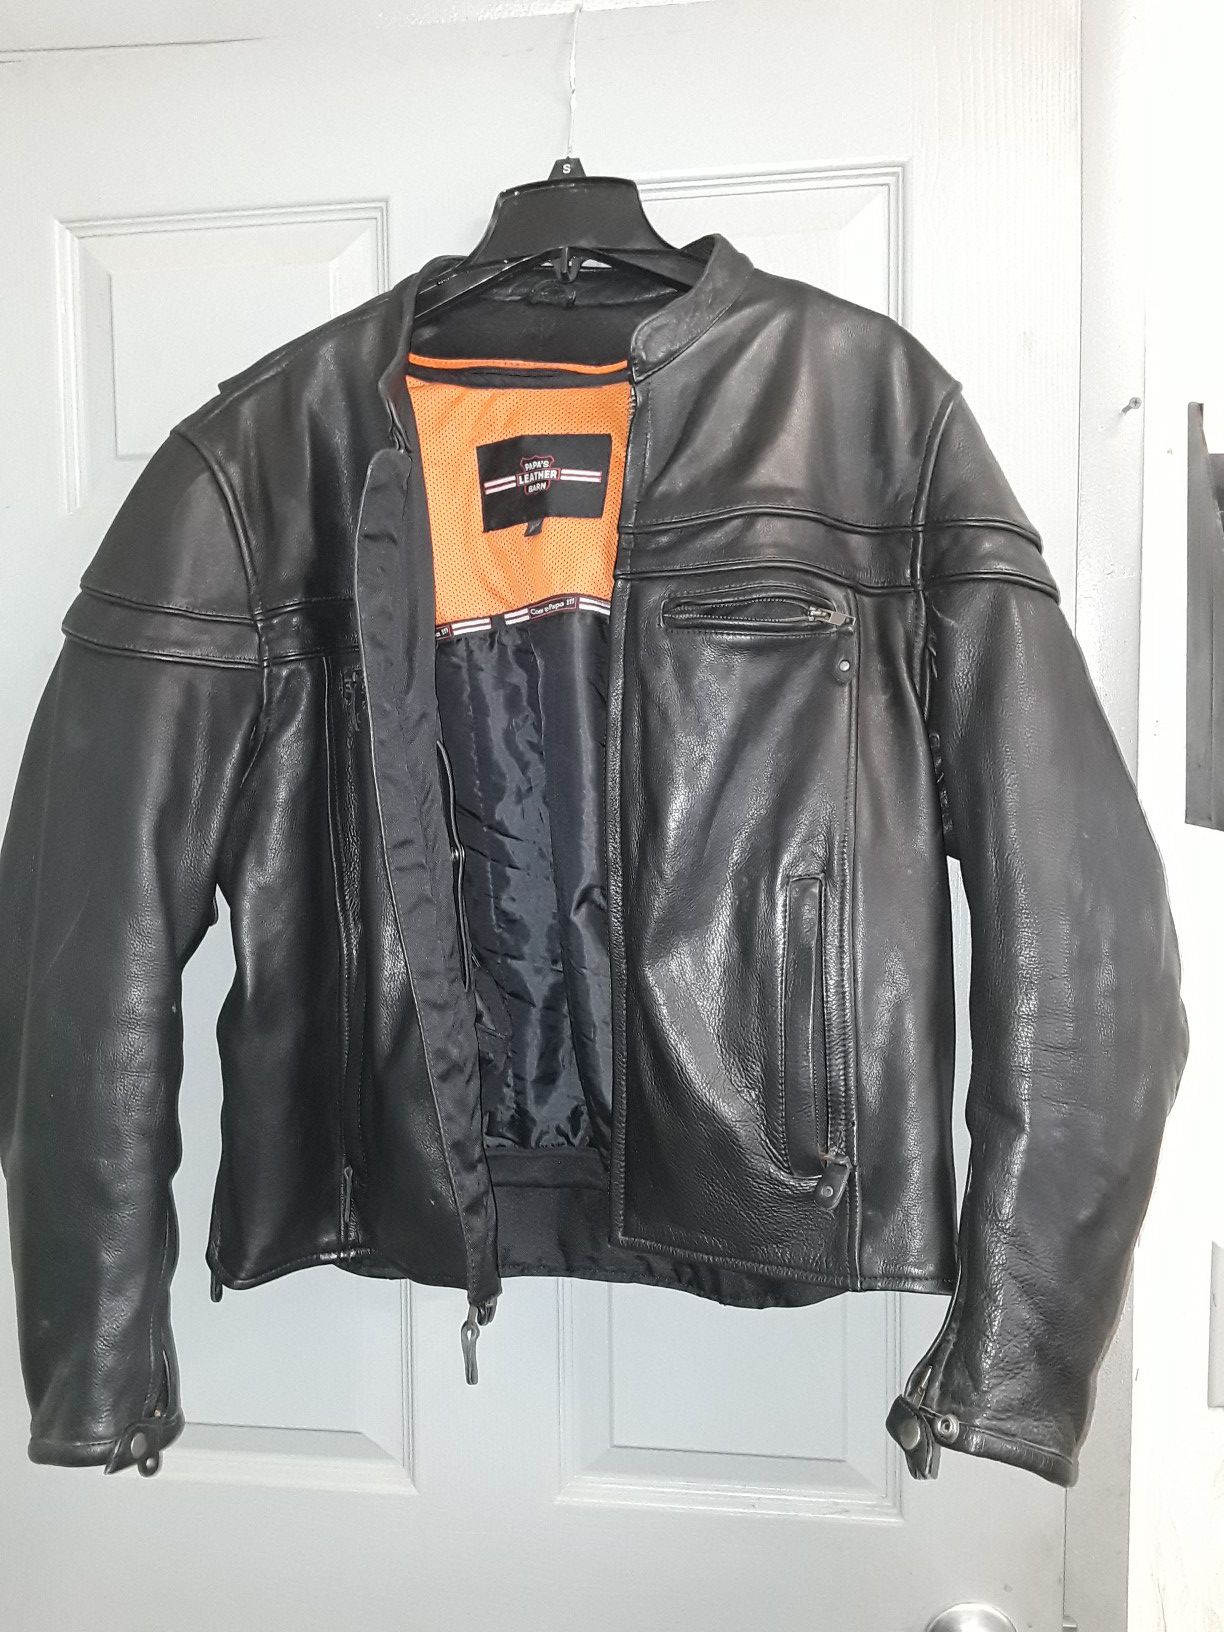 Papa's leather barn jacket